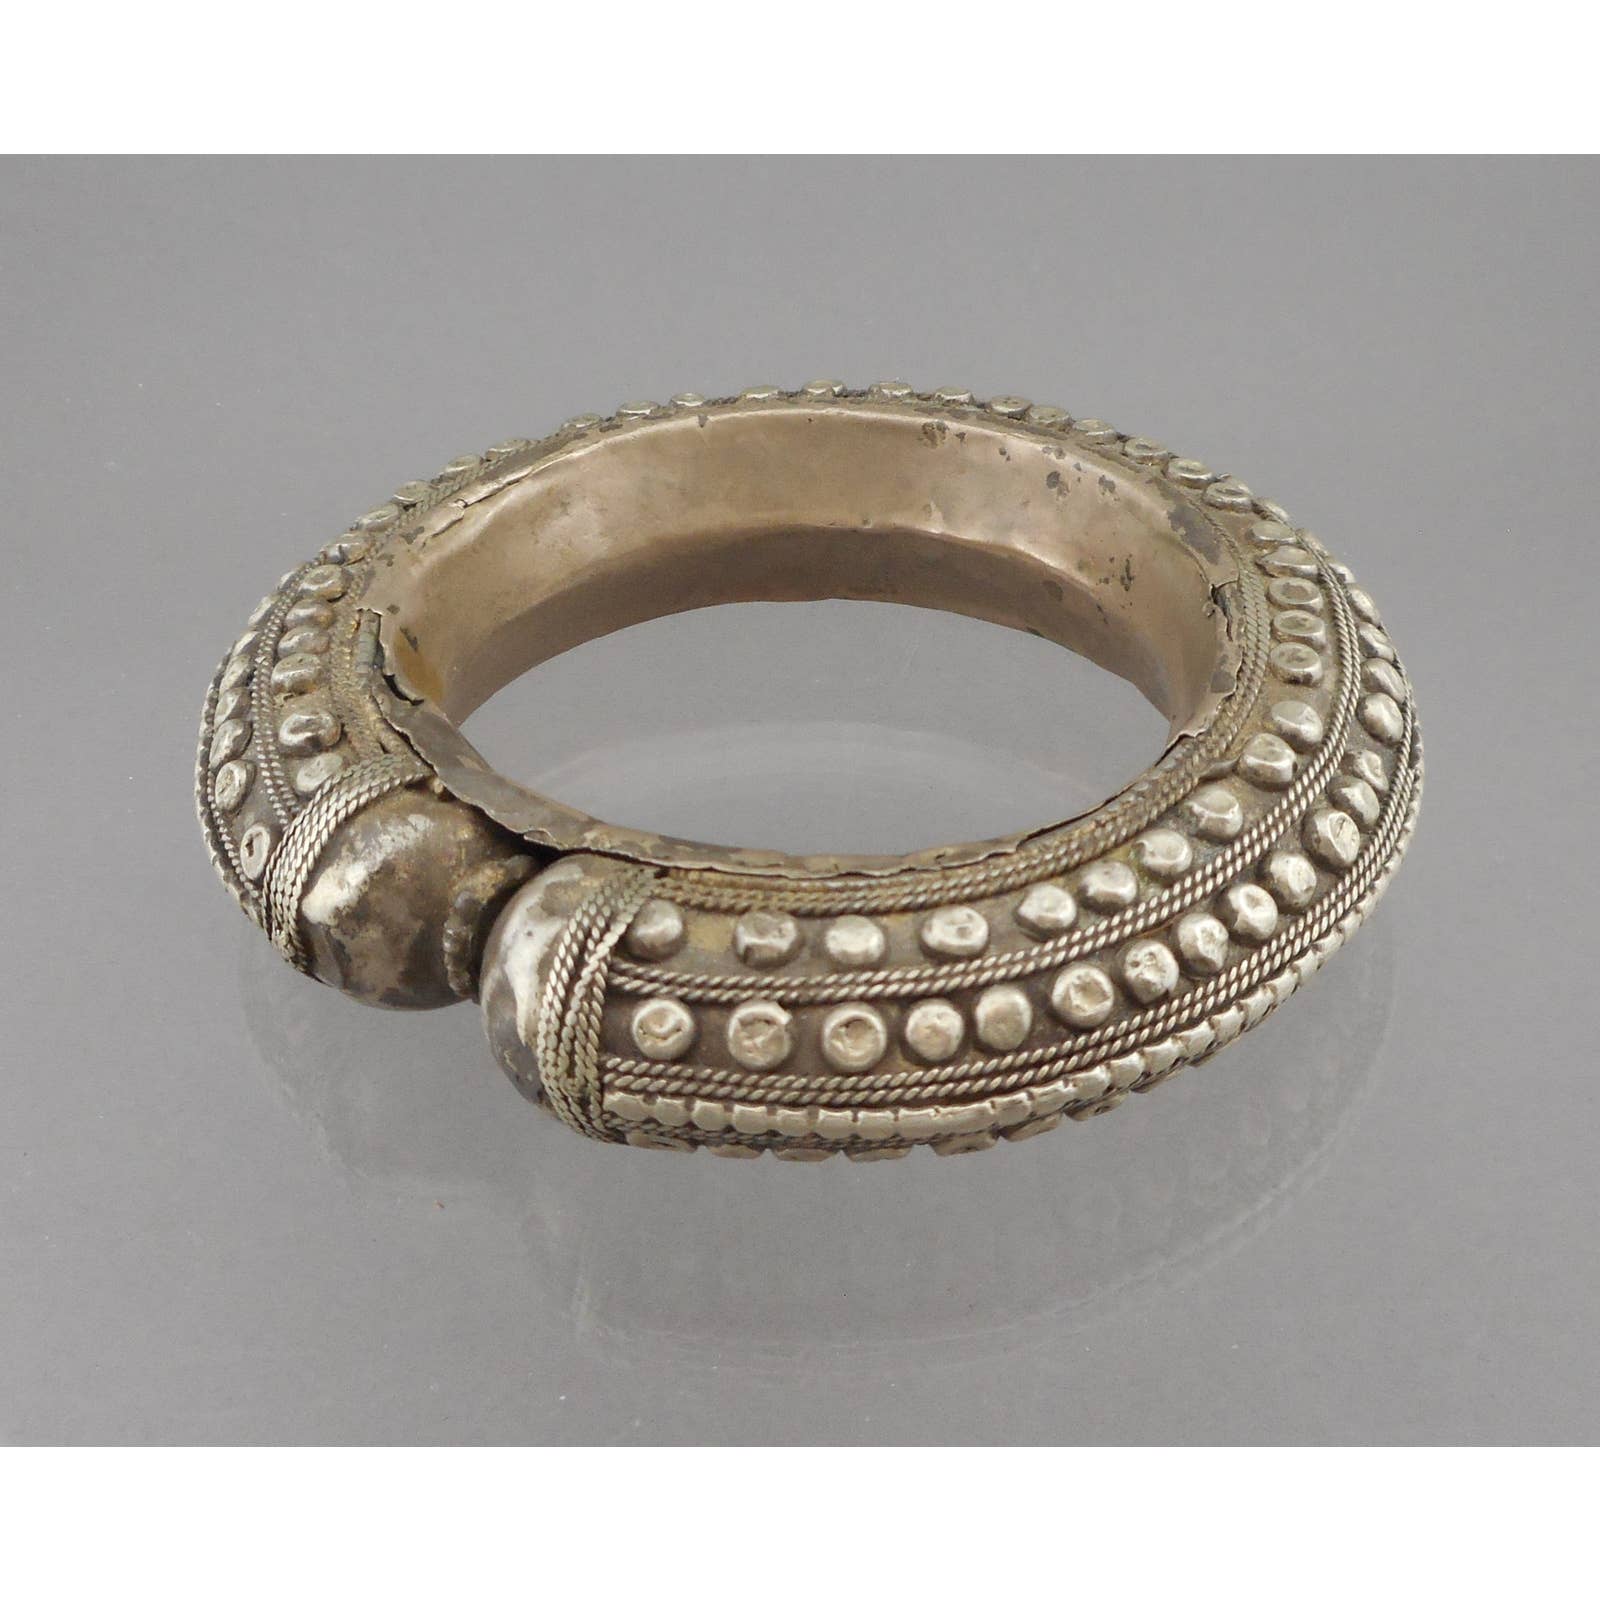 Antique silver bangle bracelet